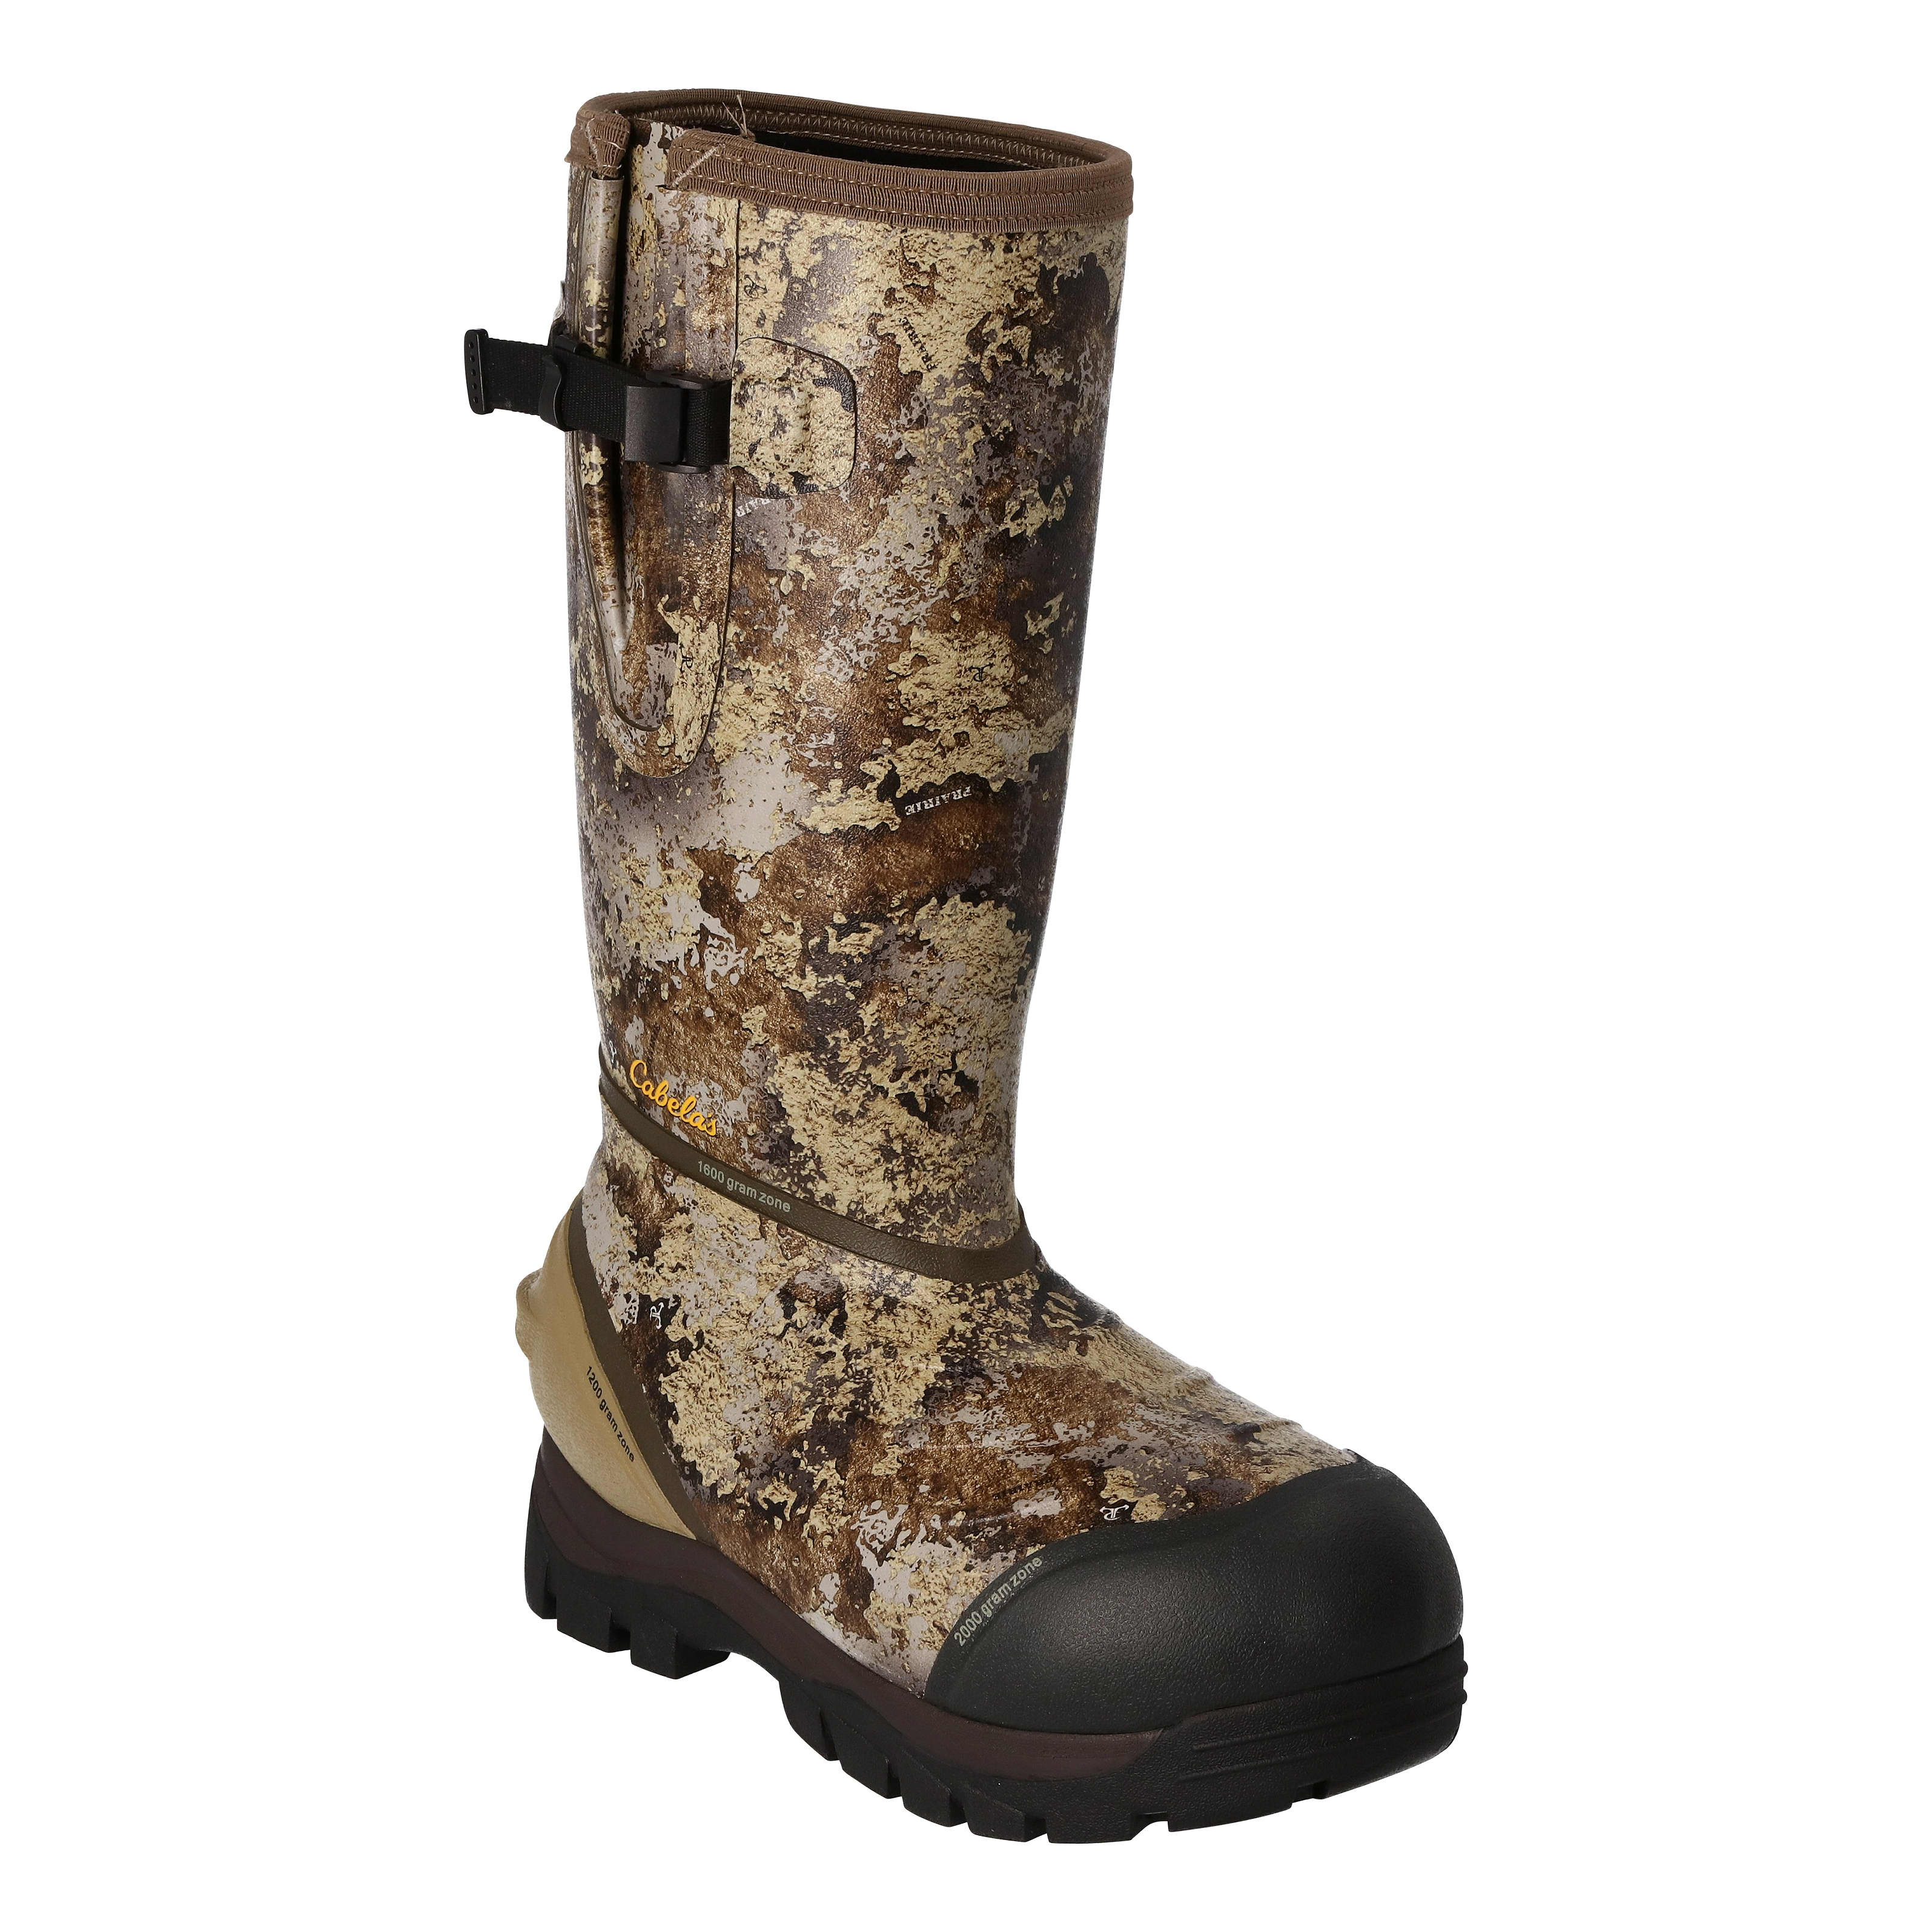 Cabela’s® Men’s Zoned Comfort Trac 2,000-Gram Rubber Boots - Prairie